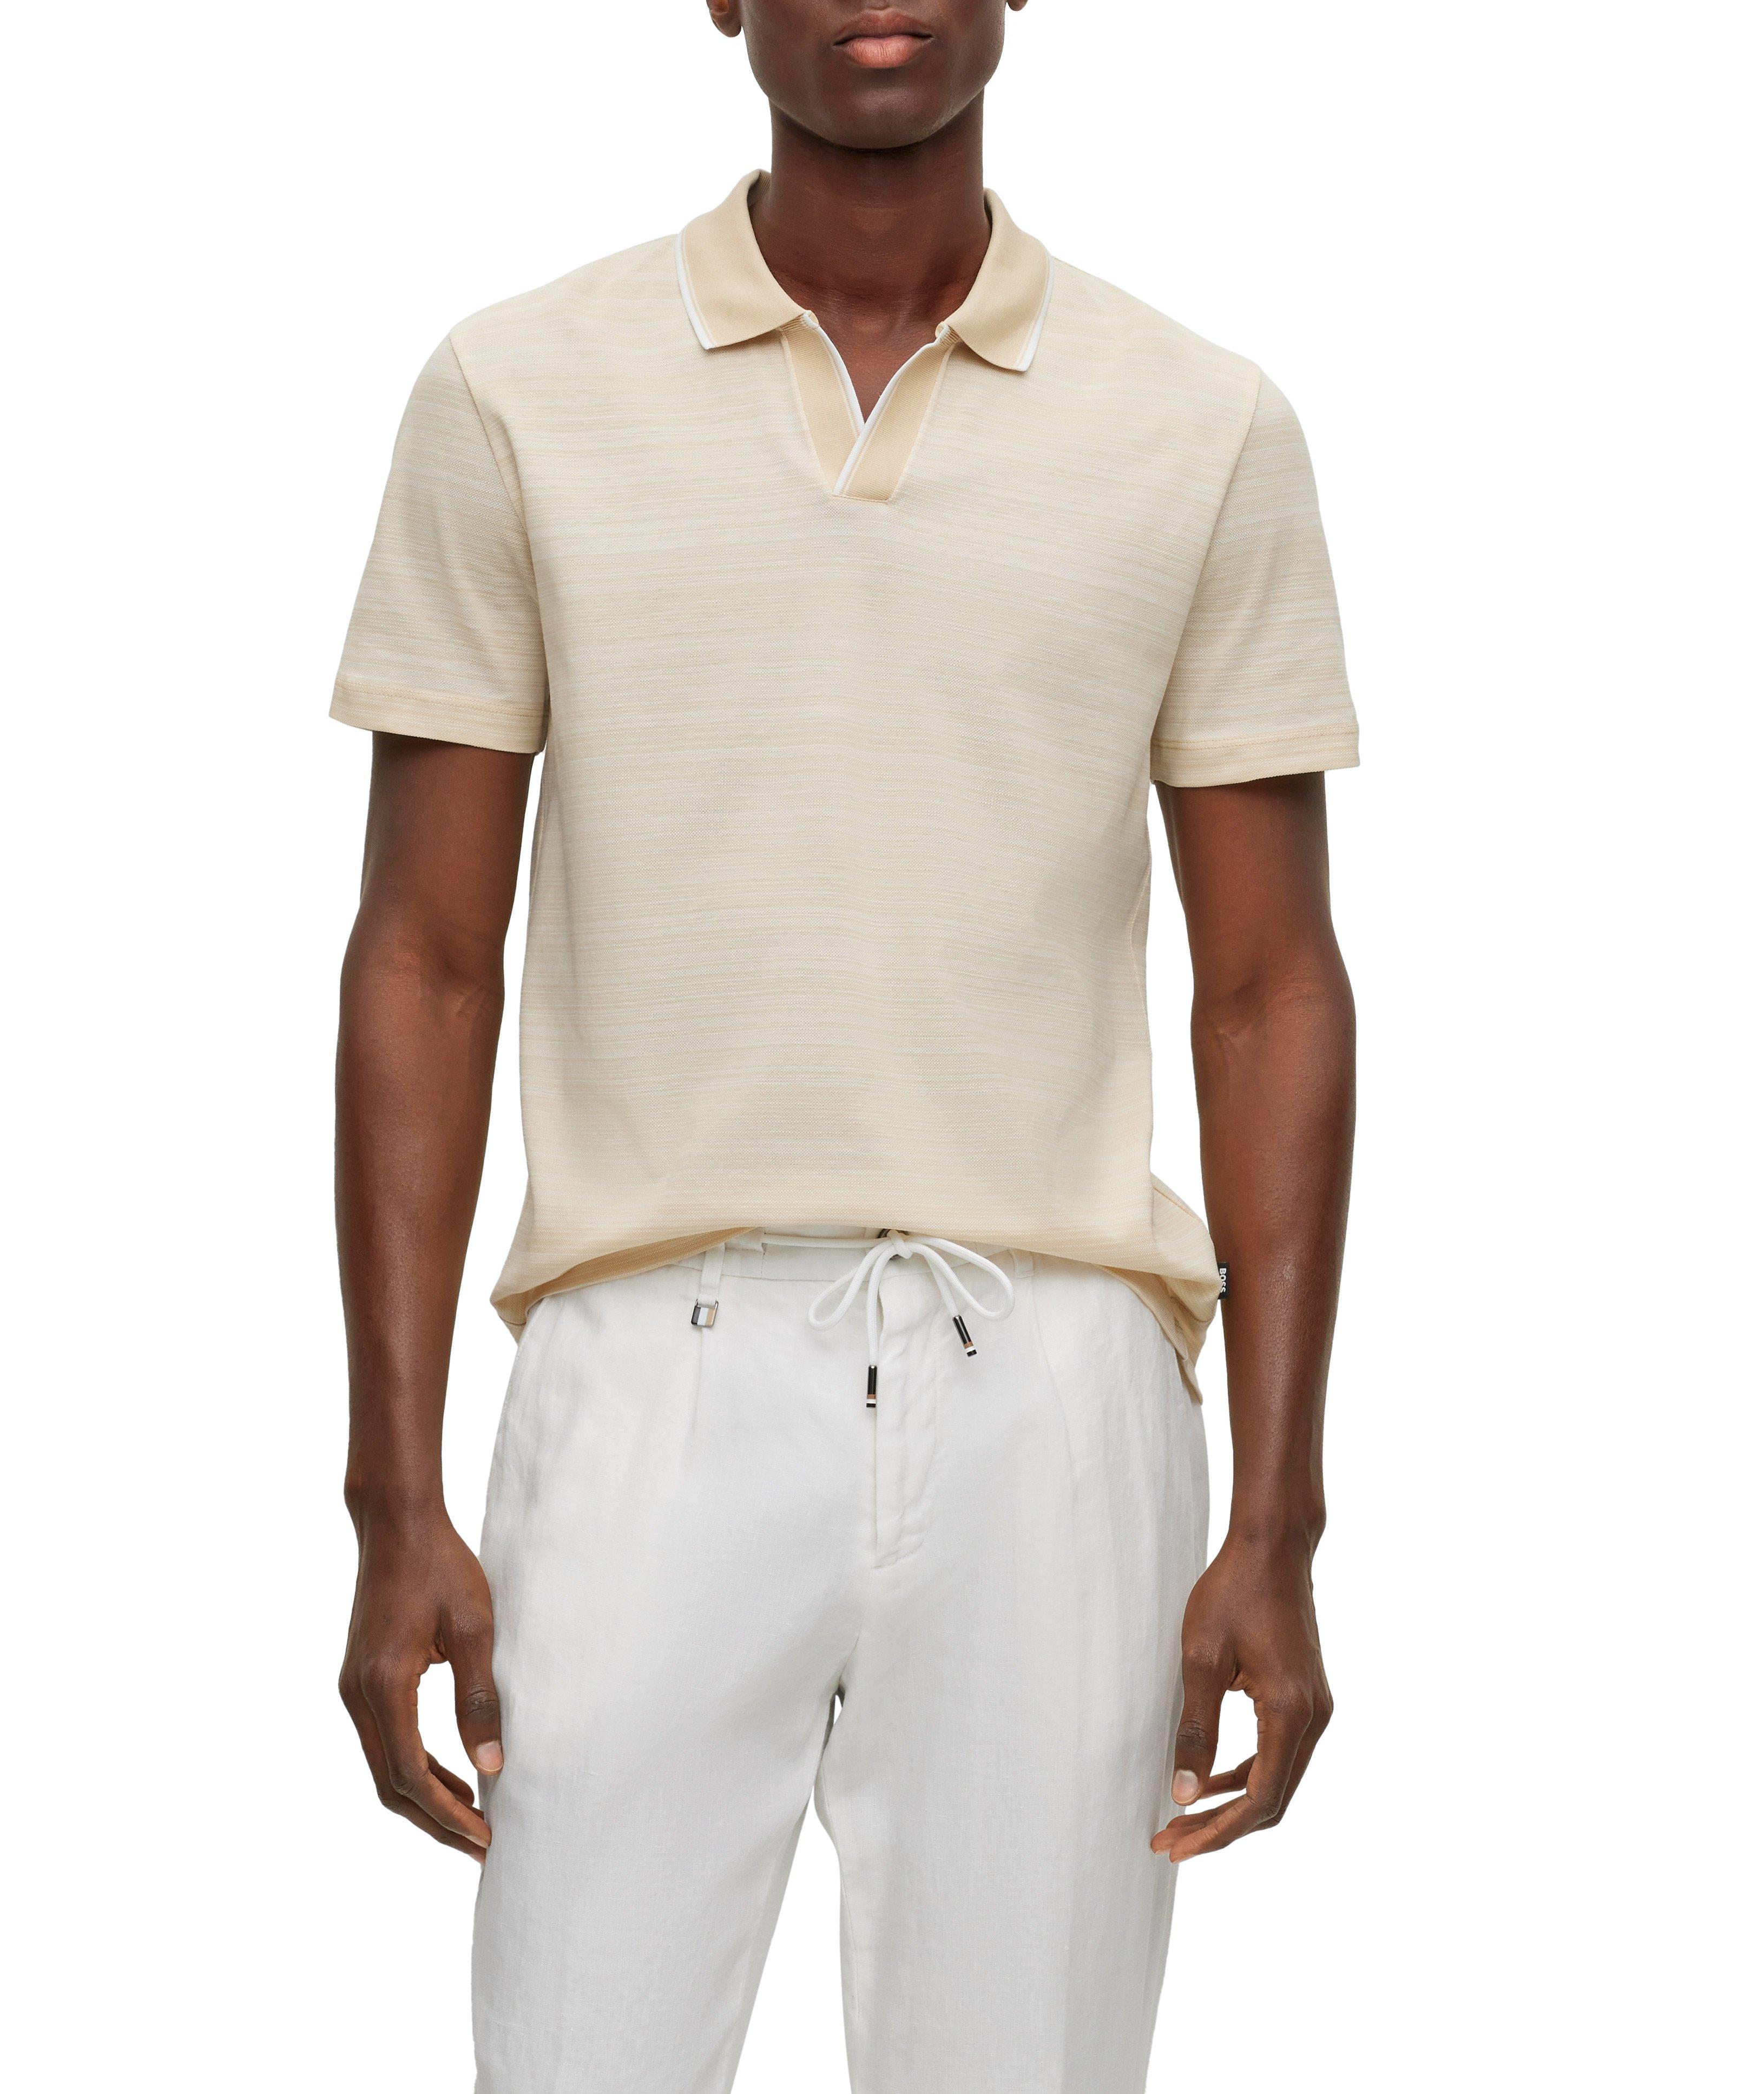 Tonal Jacquard Mercerized Cotton Polo  image 2